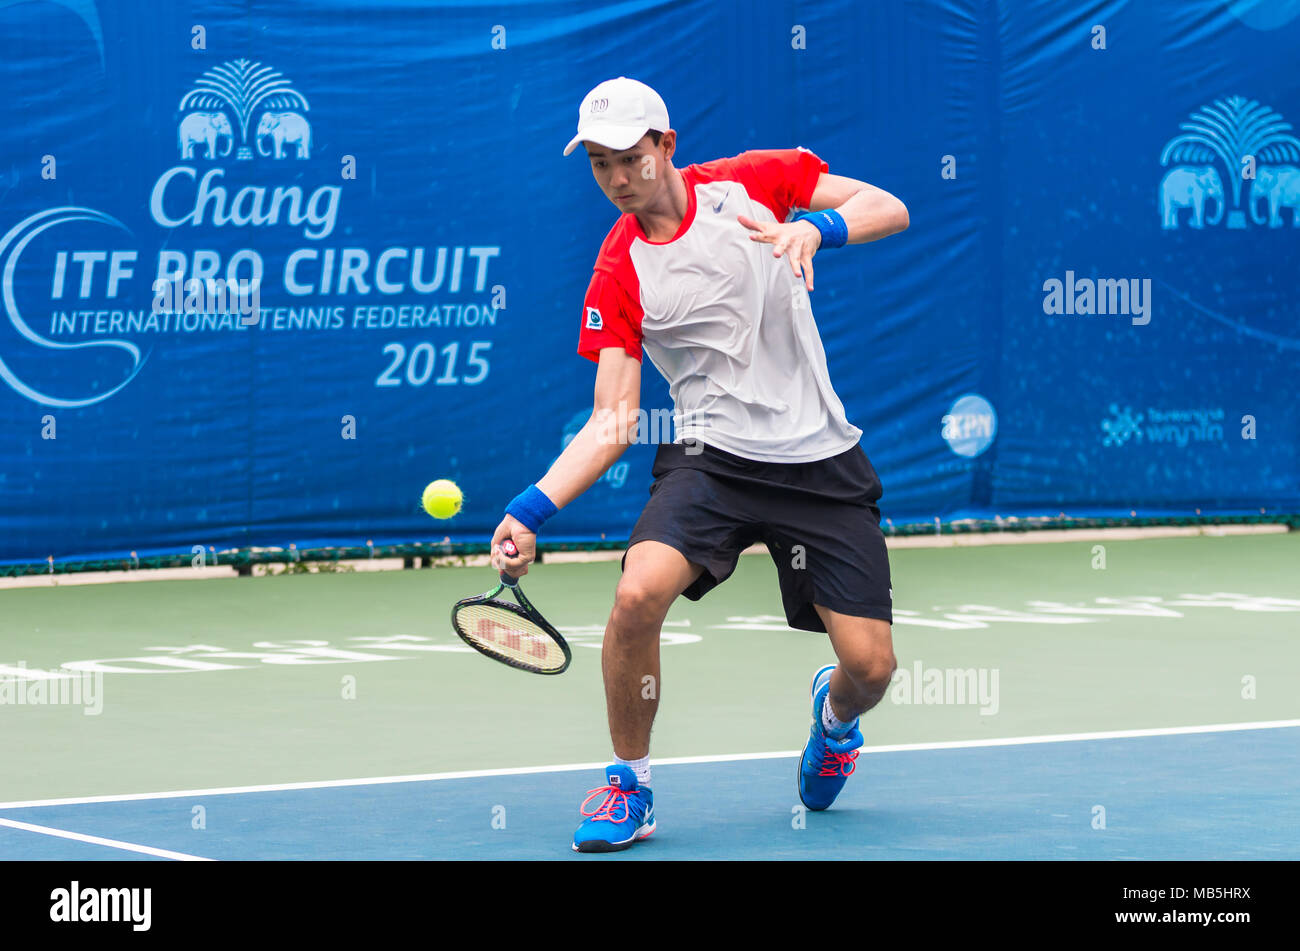 Itf pro circuit tennis tour hi-res stock photography and images - Alamy